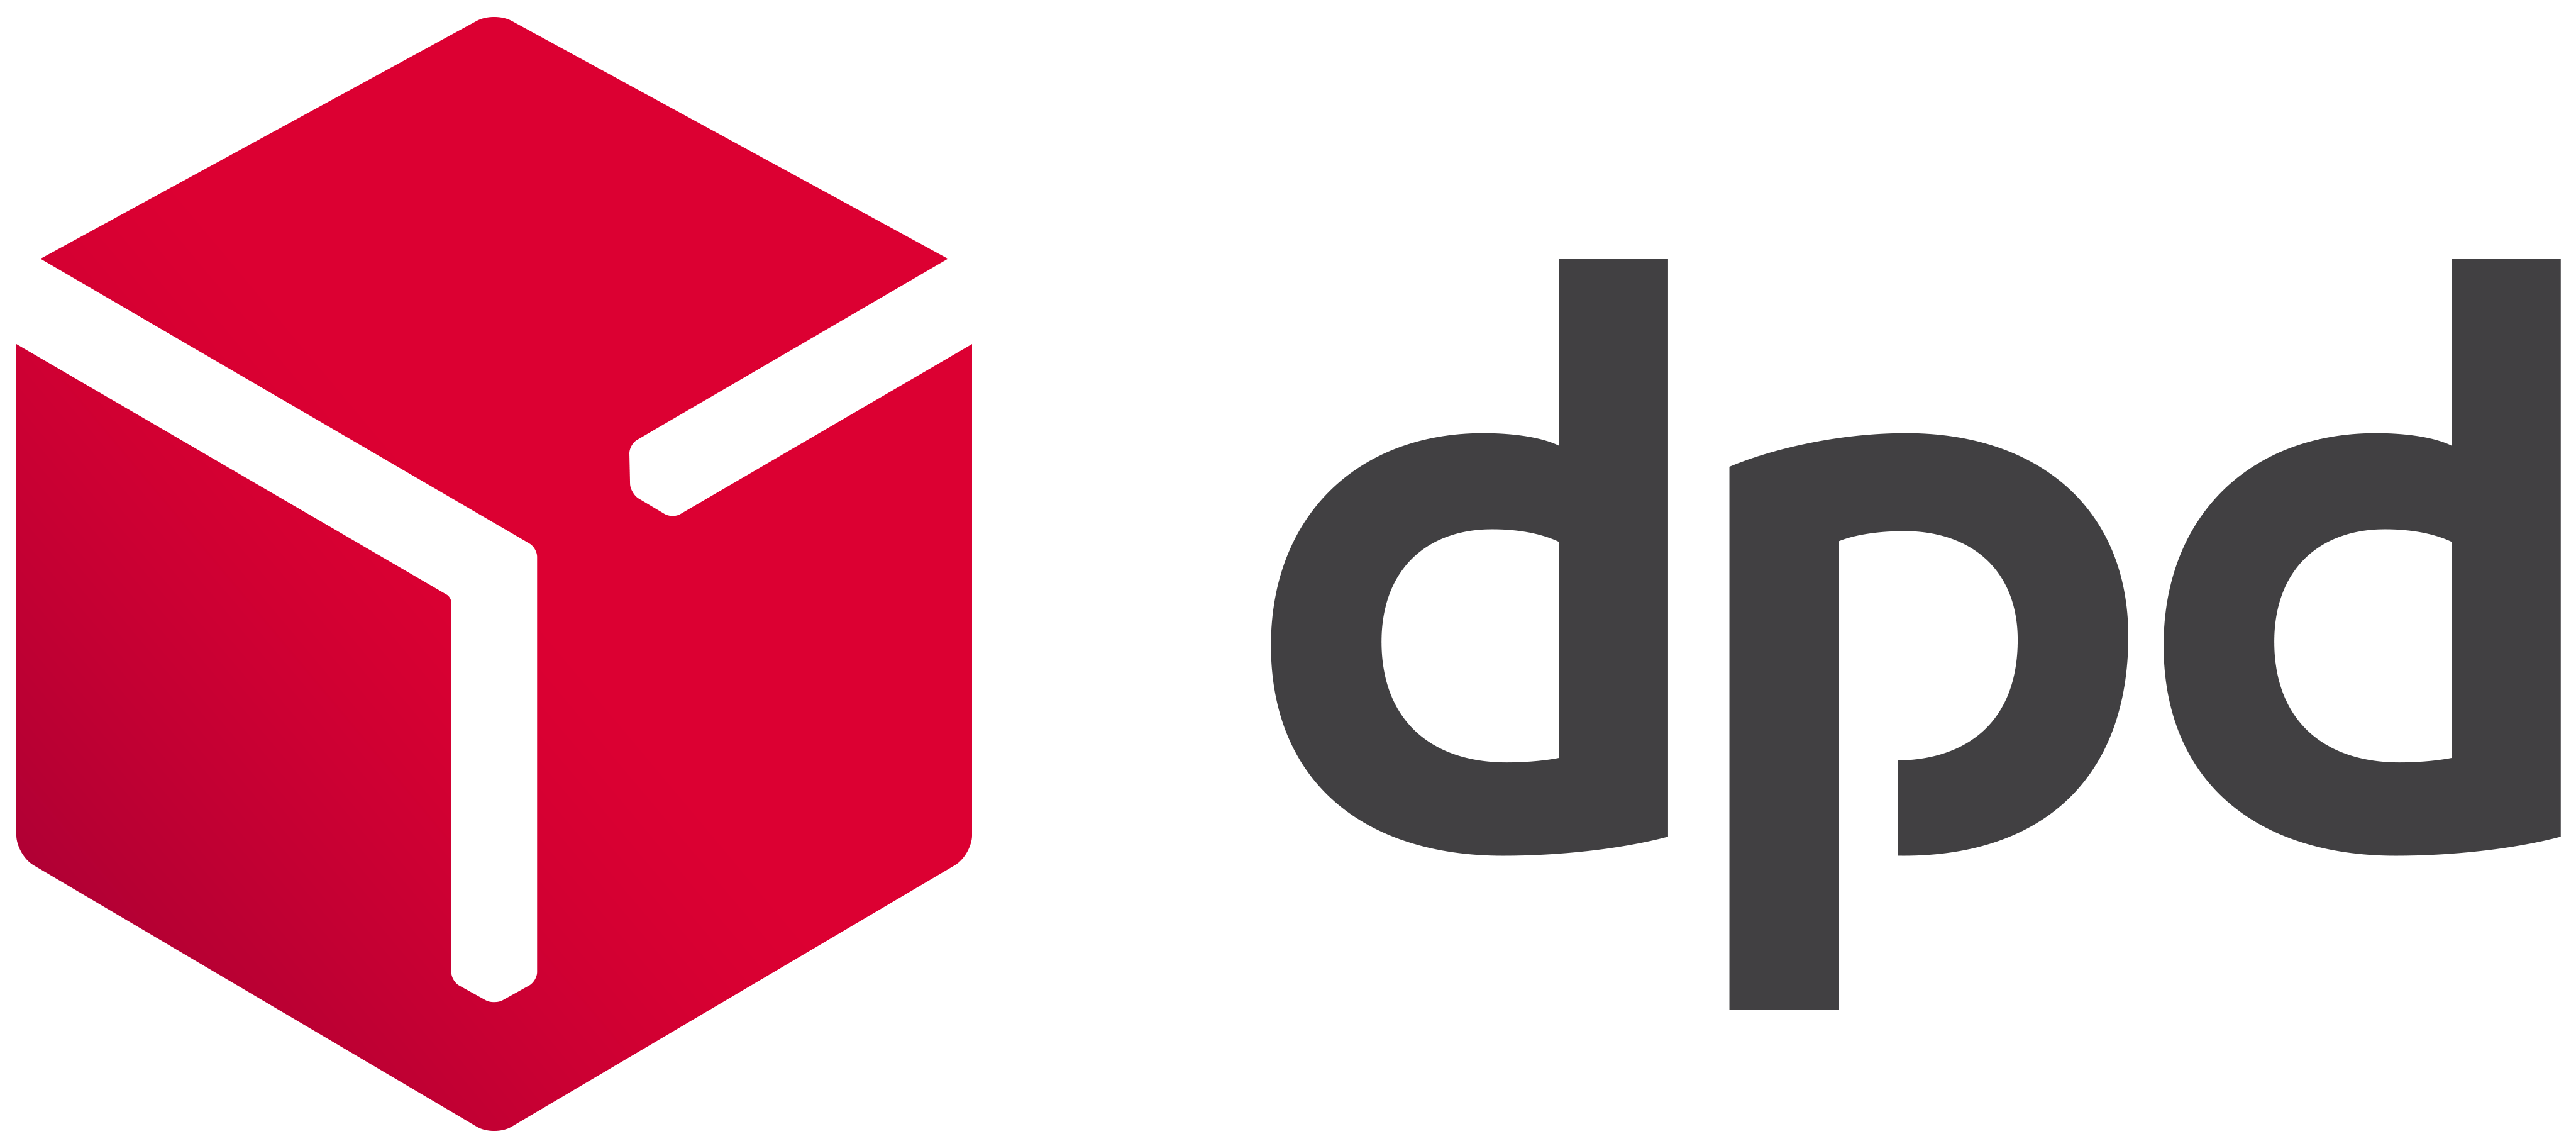 dpd_logo.png